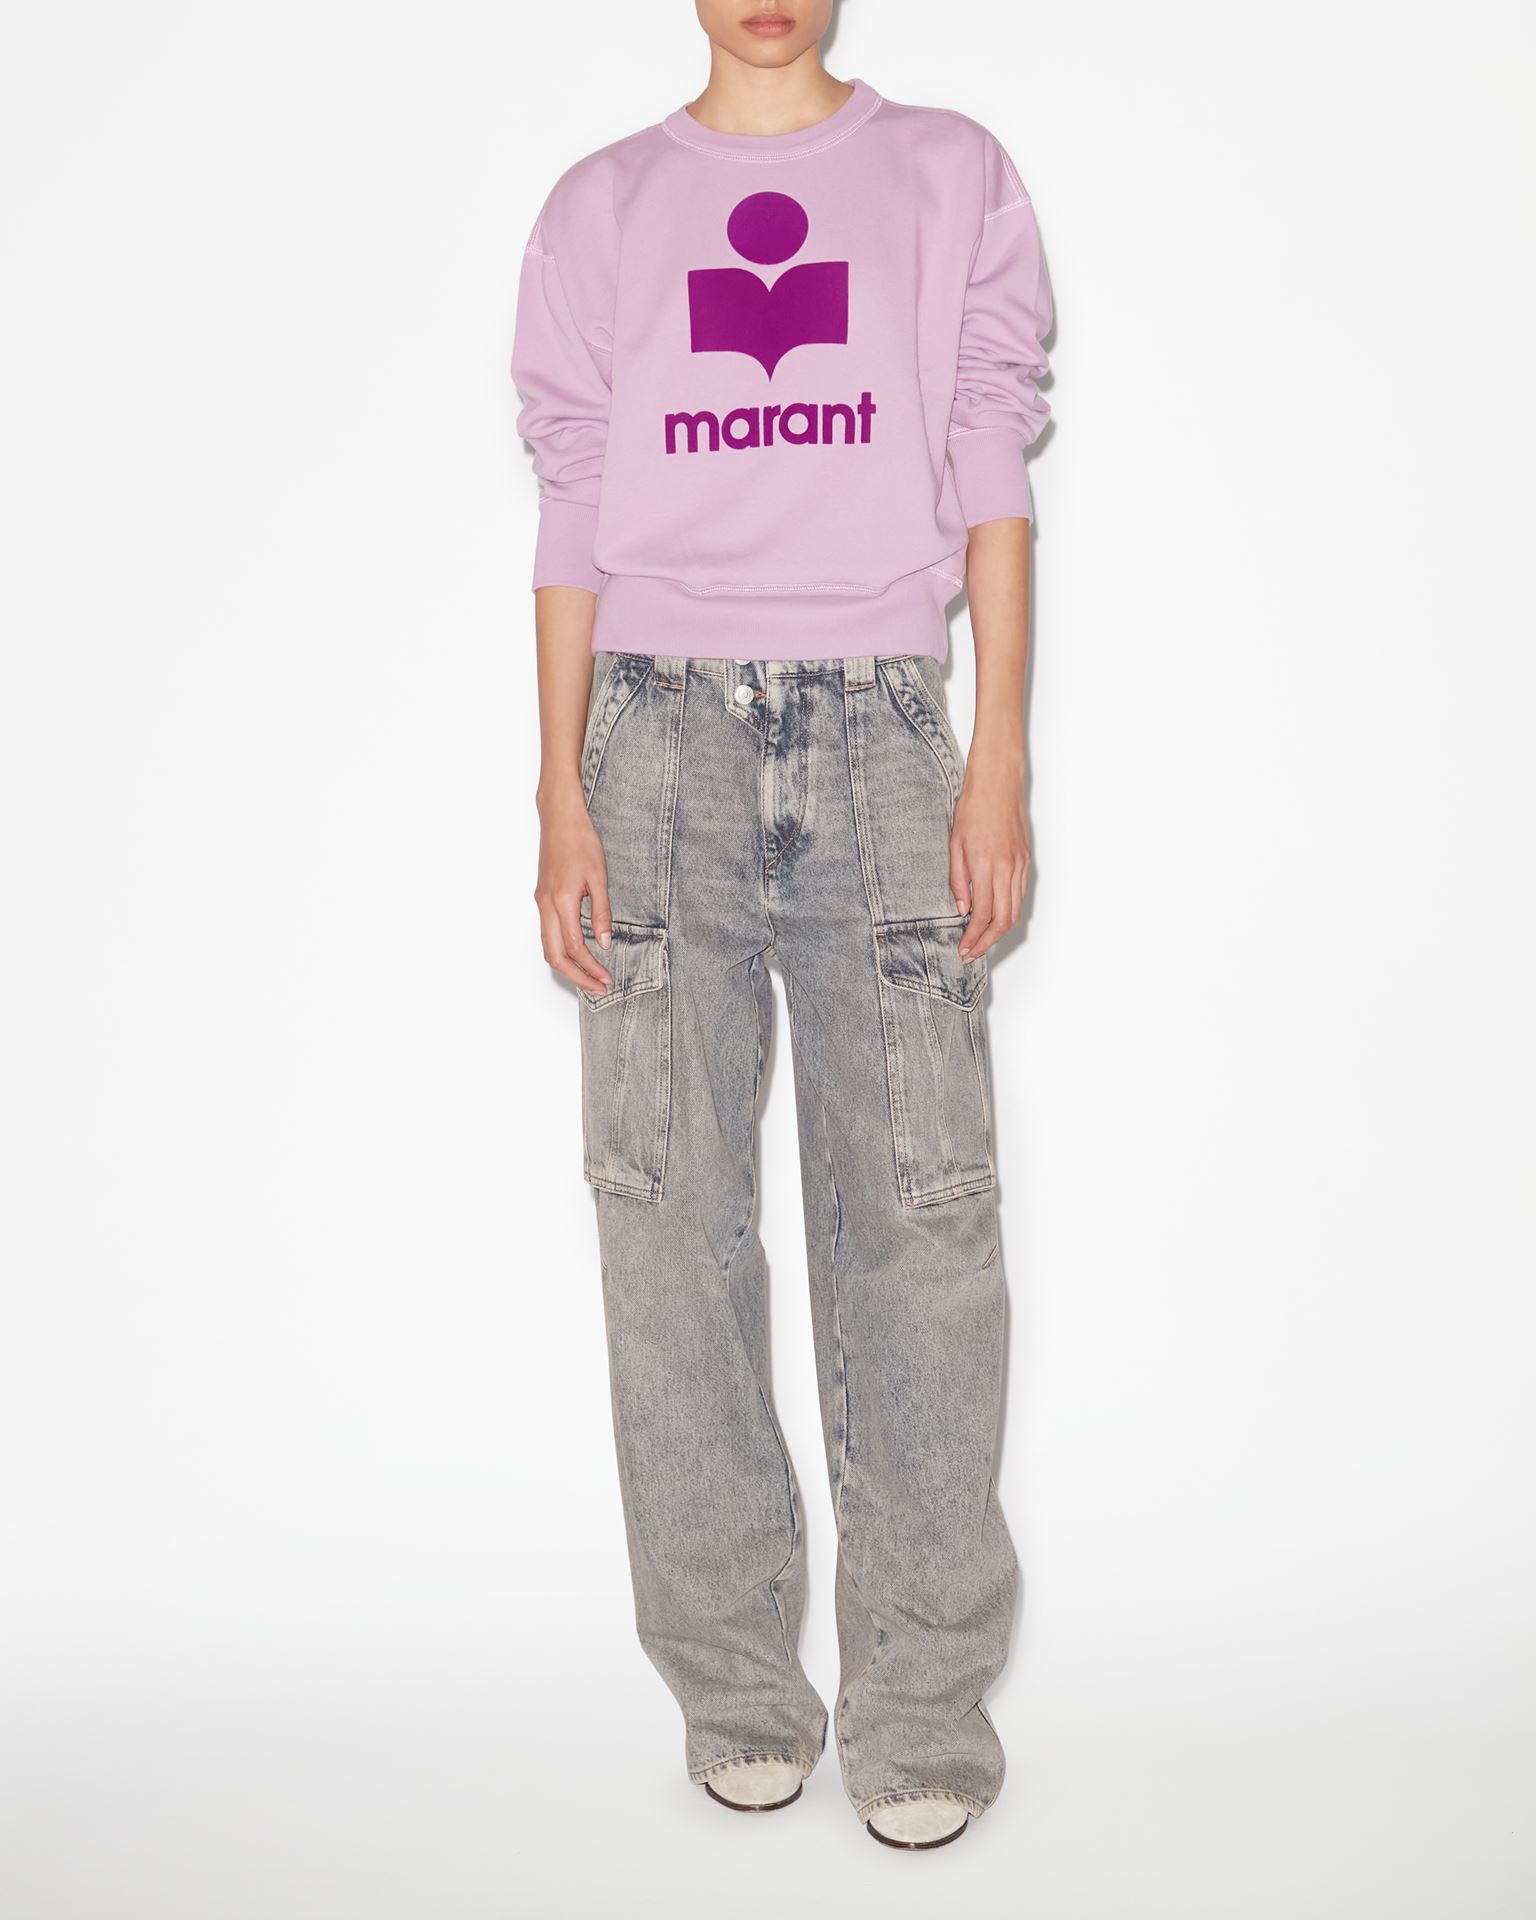 Isabel Marant Marant Étoile, Mobyli Logo Sweatshirt - Donna - Rosa